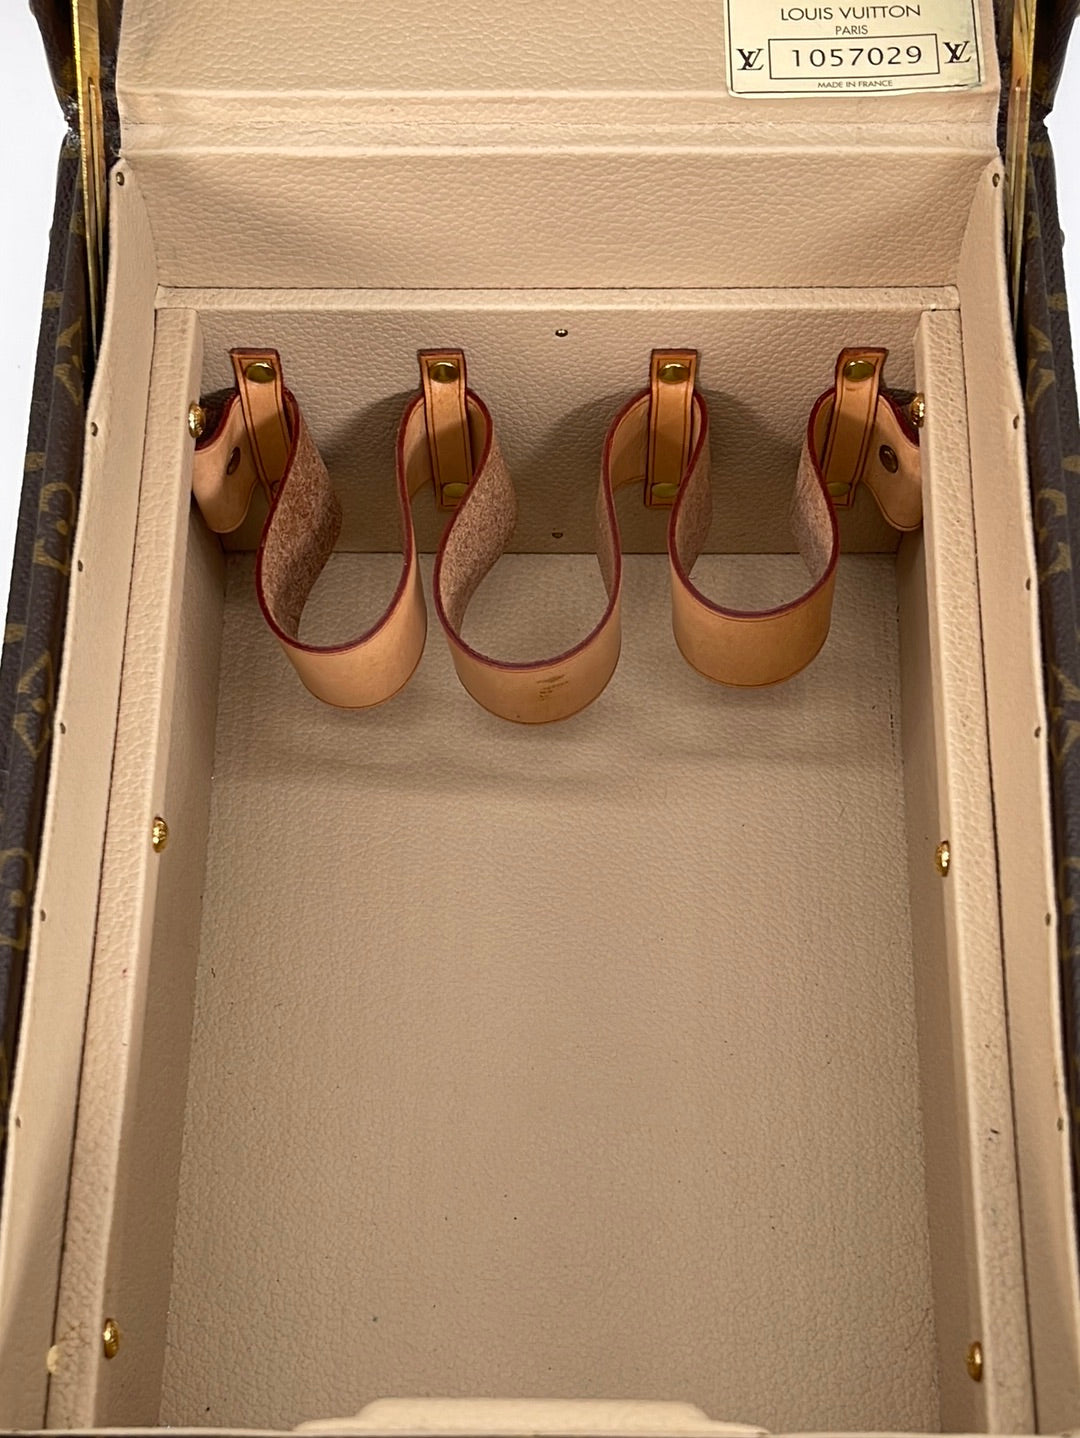 Louis Vuitton Boite Flacons Beauty Train Case Monogram Canvas Brown